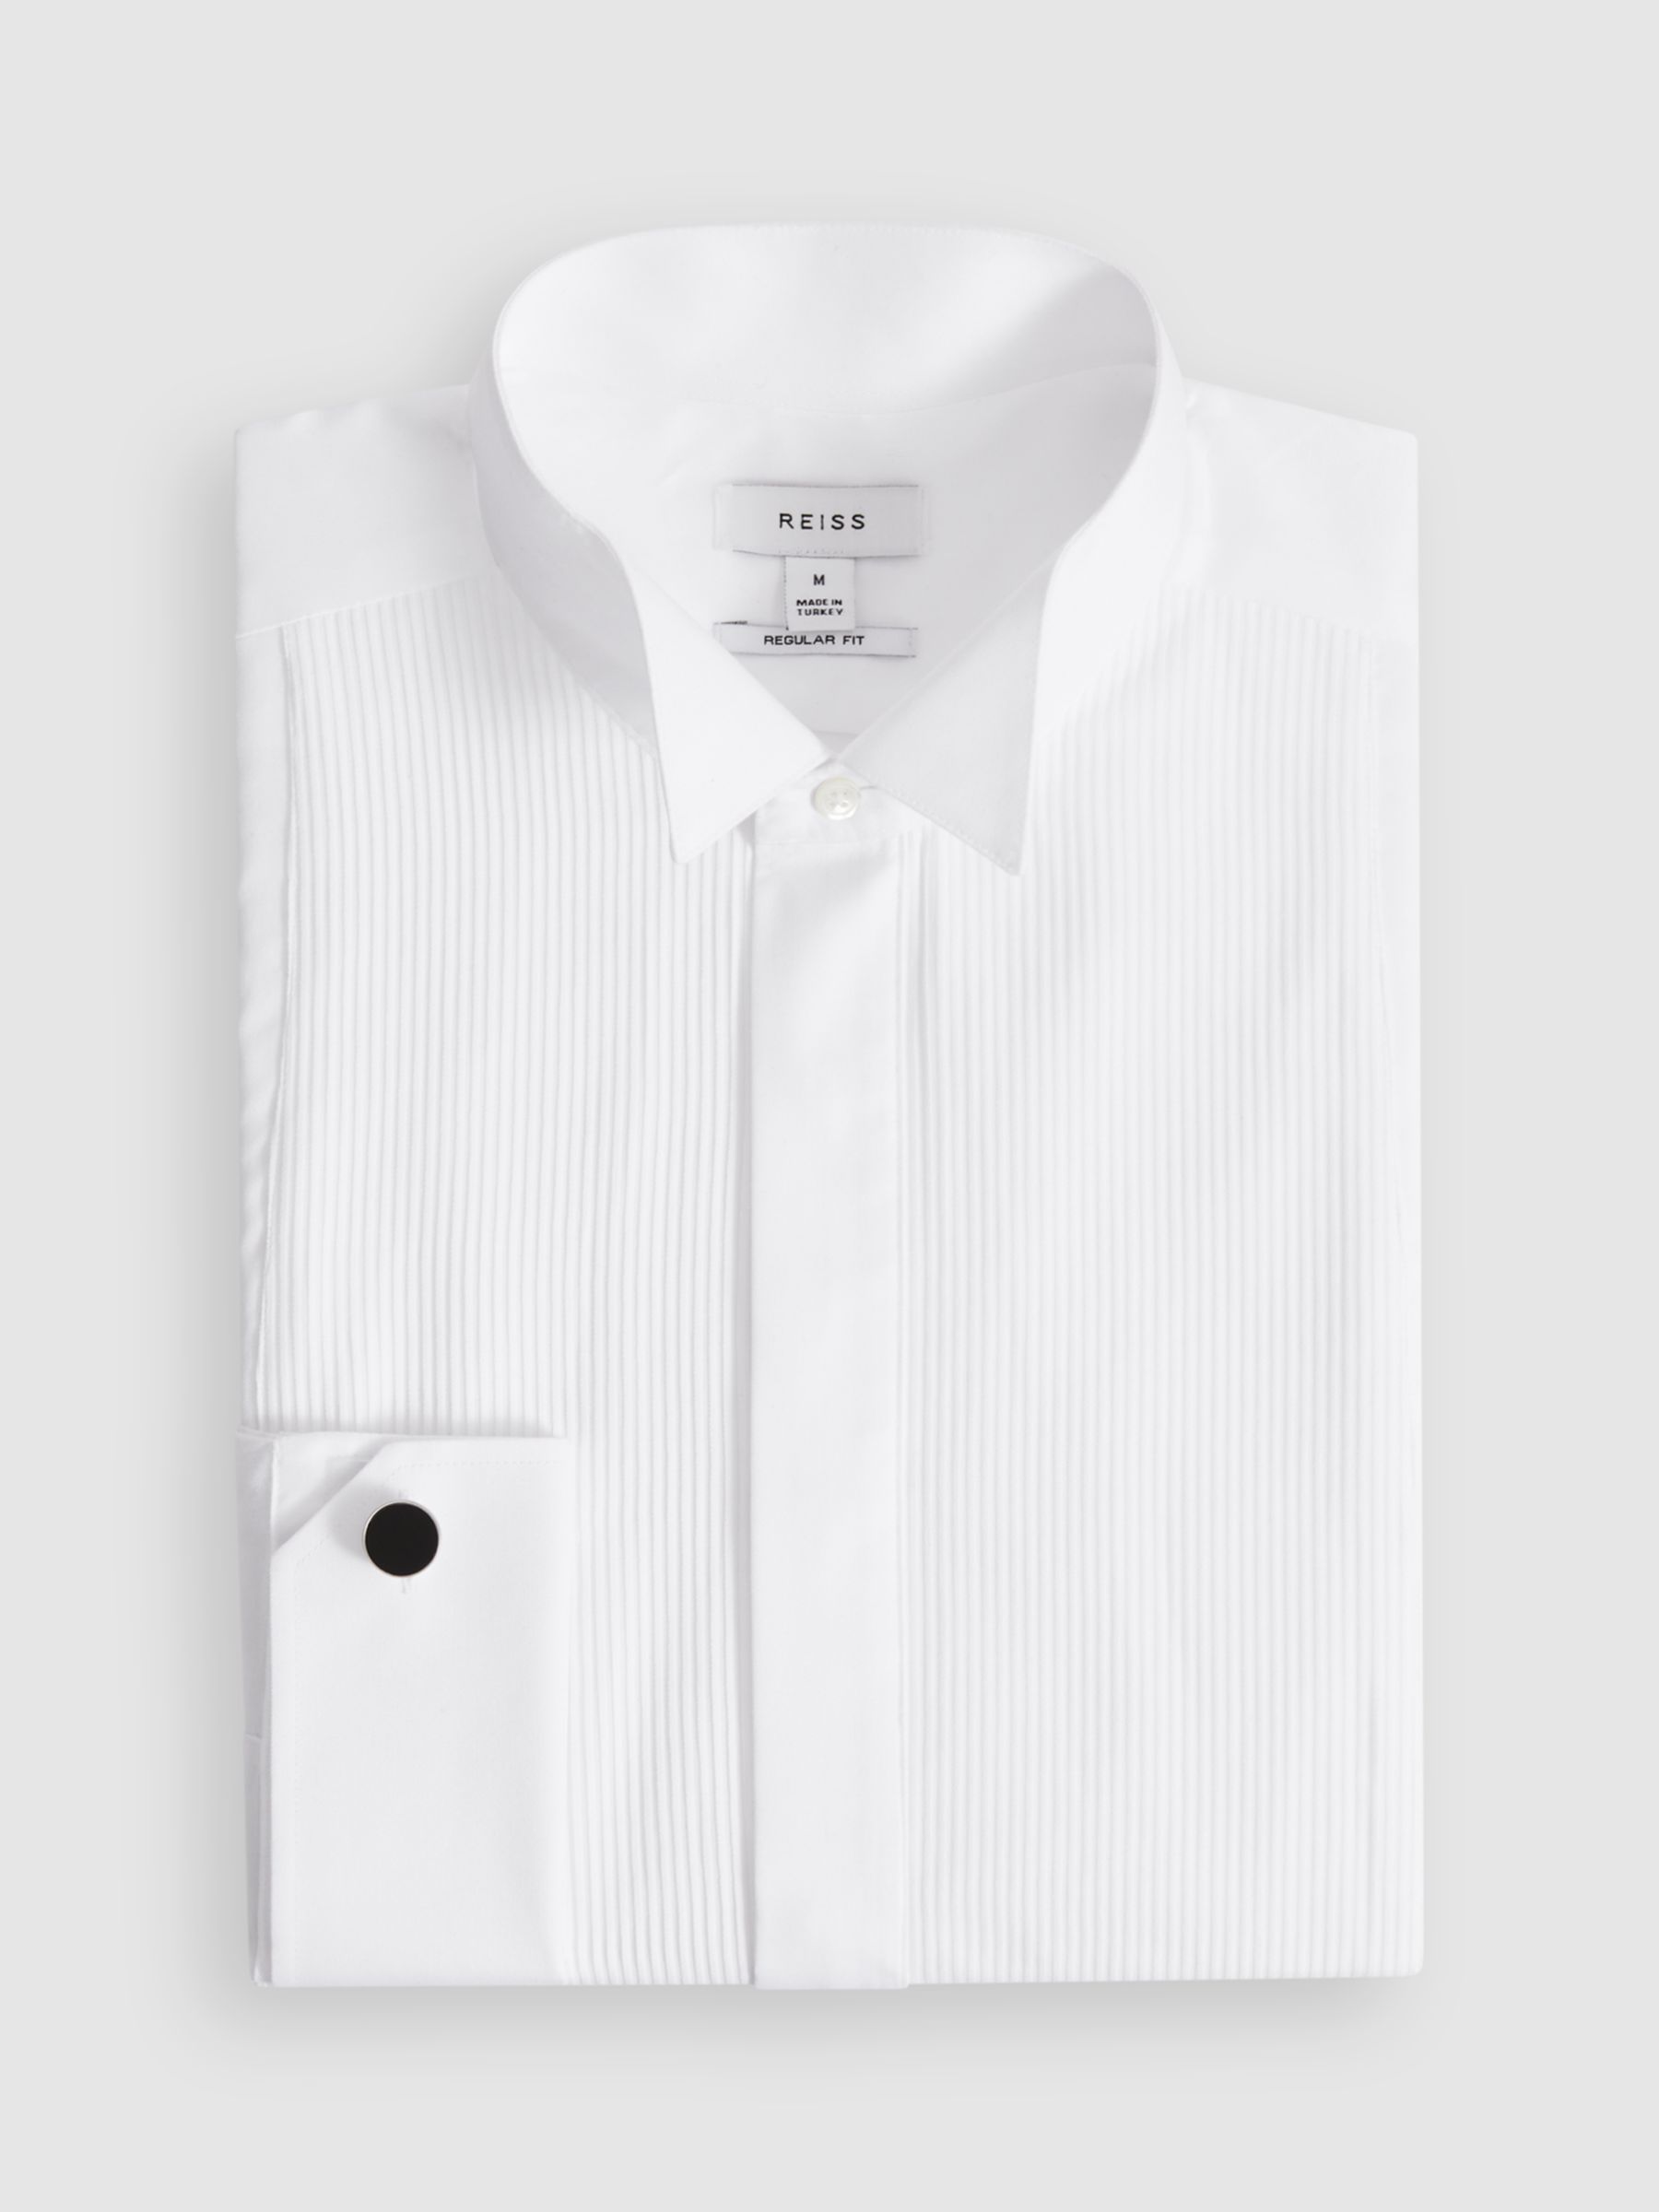 Reiss Fitzrovia Long Sleeve Wingtip Plea Shirt, White, XS